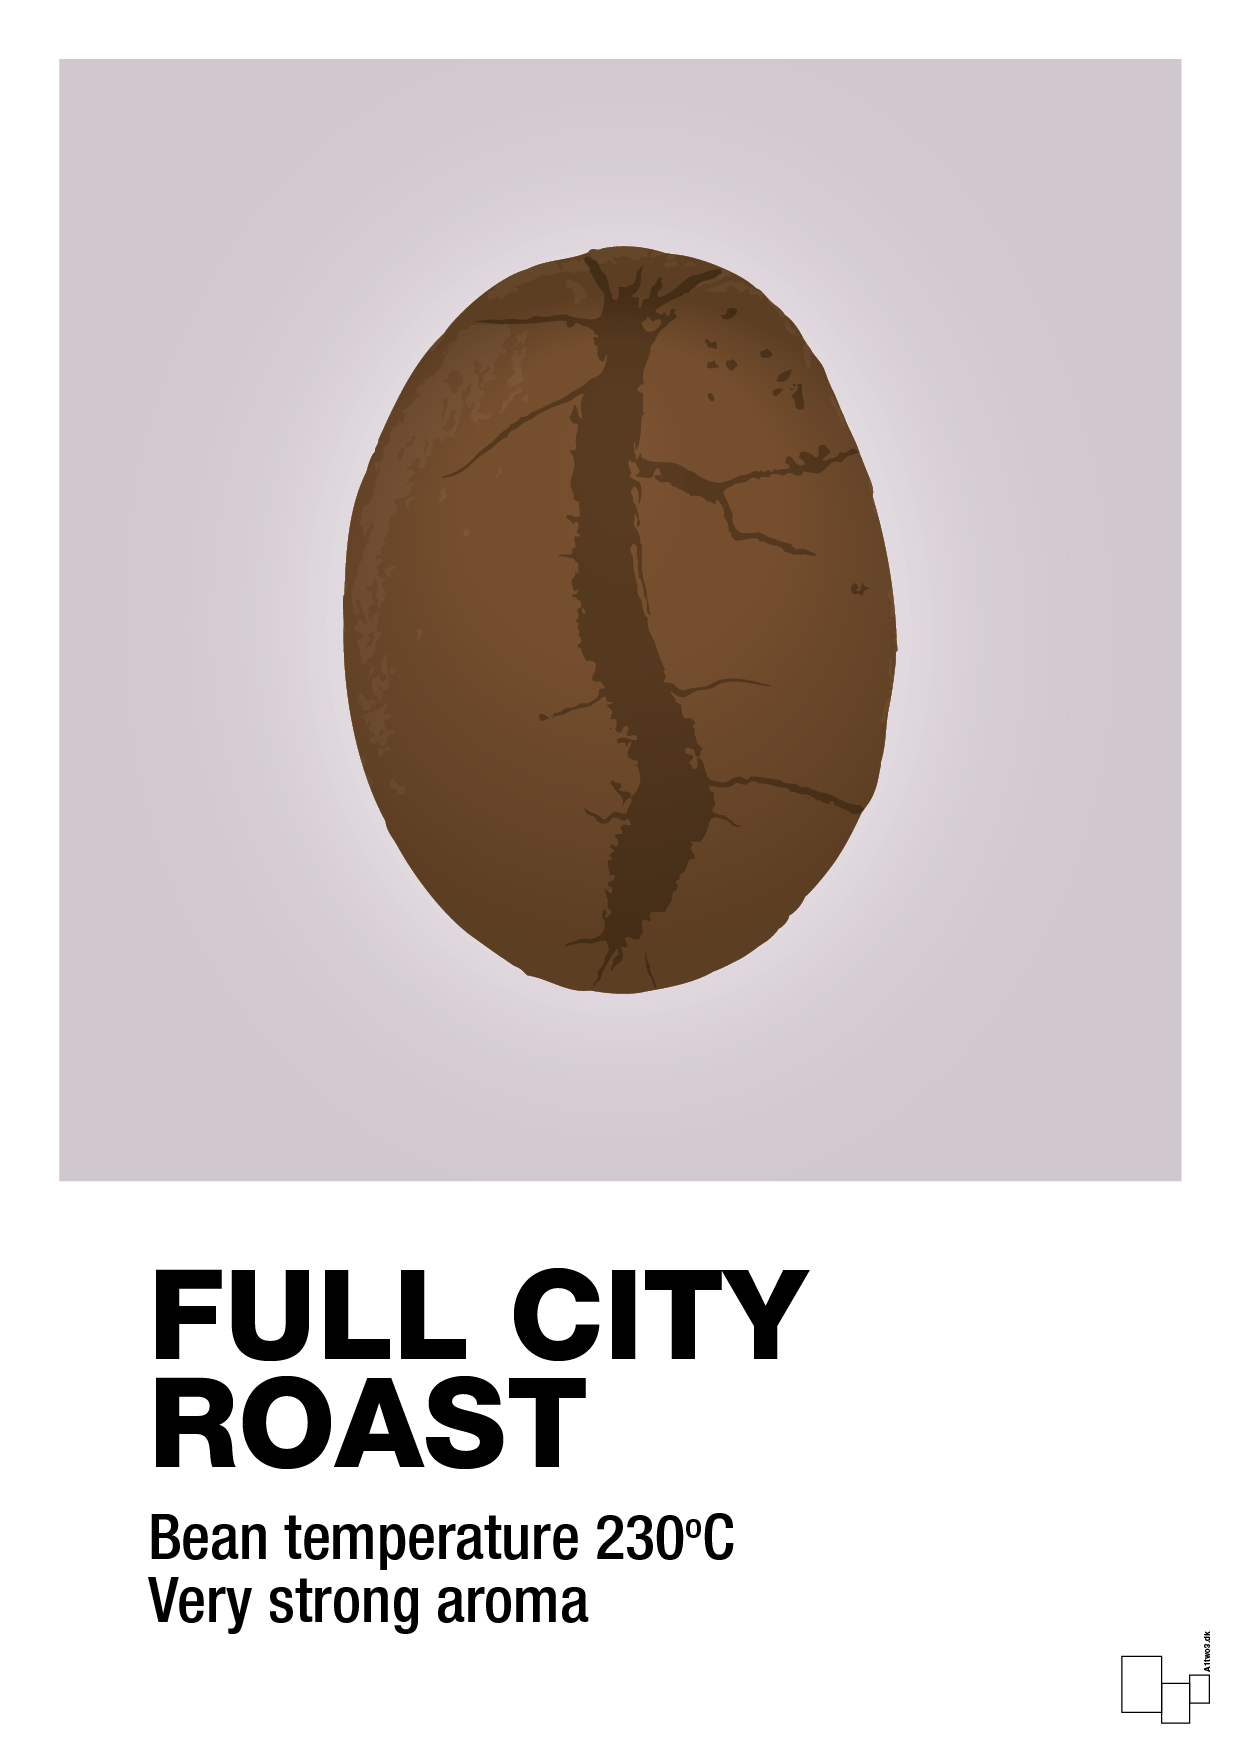 full city roast - Plakat med Mad & Drikke i Dusty Lilac